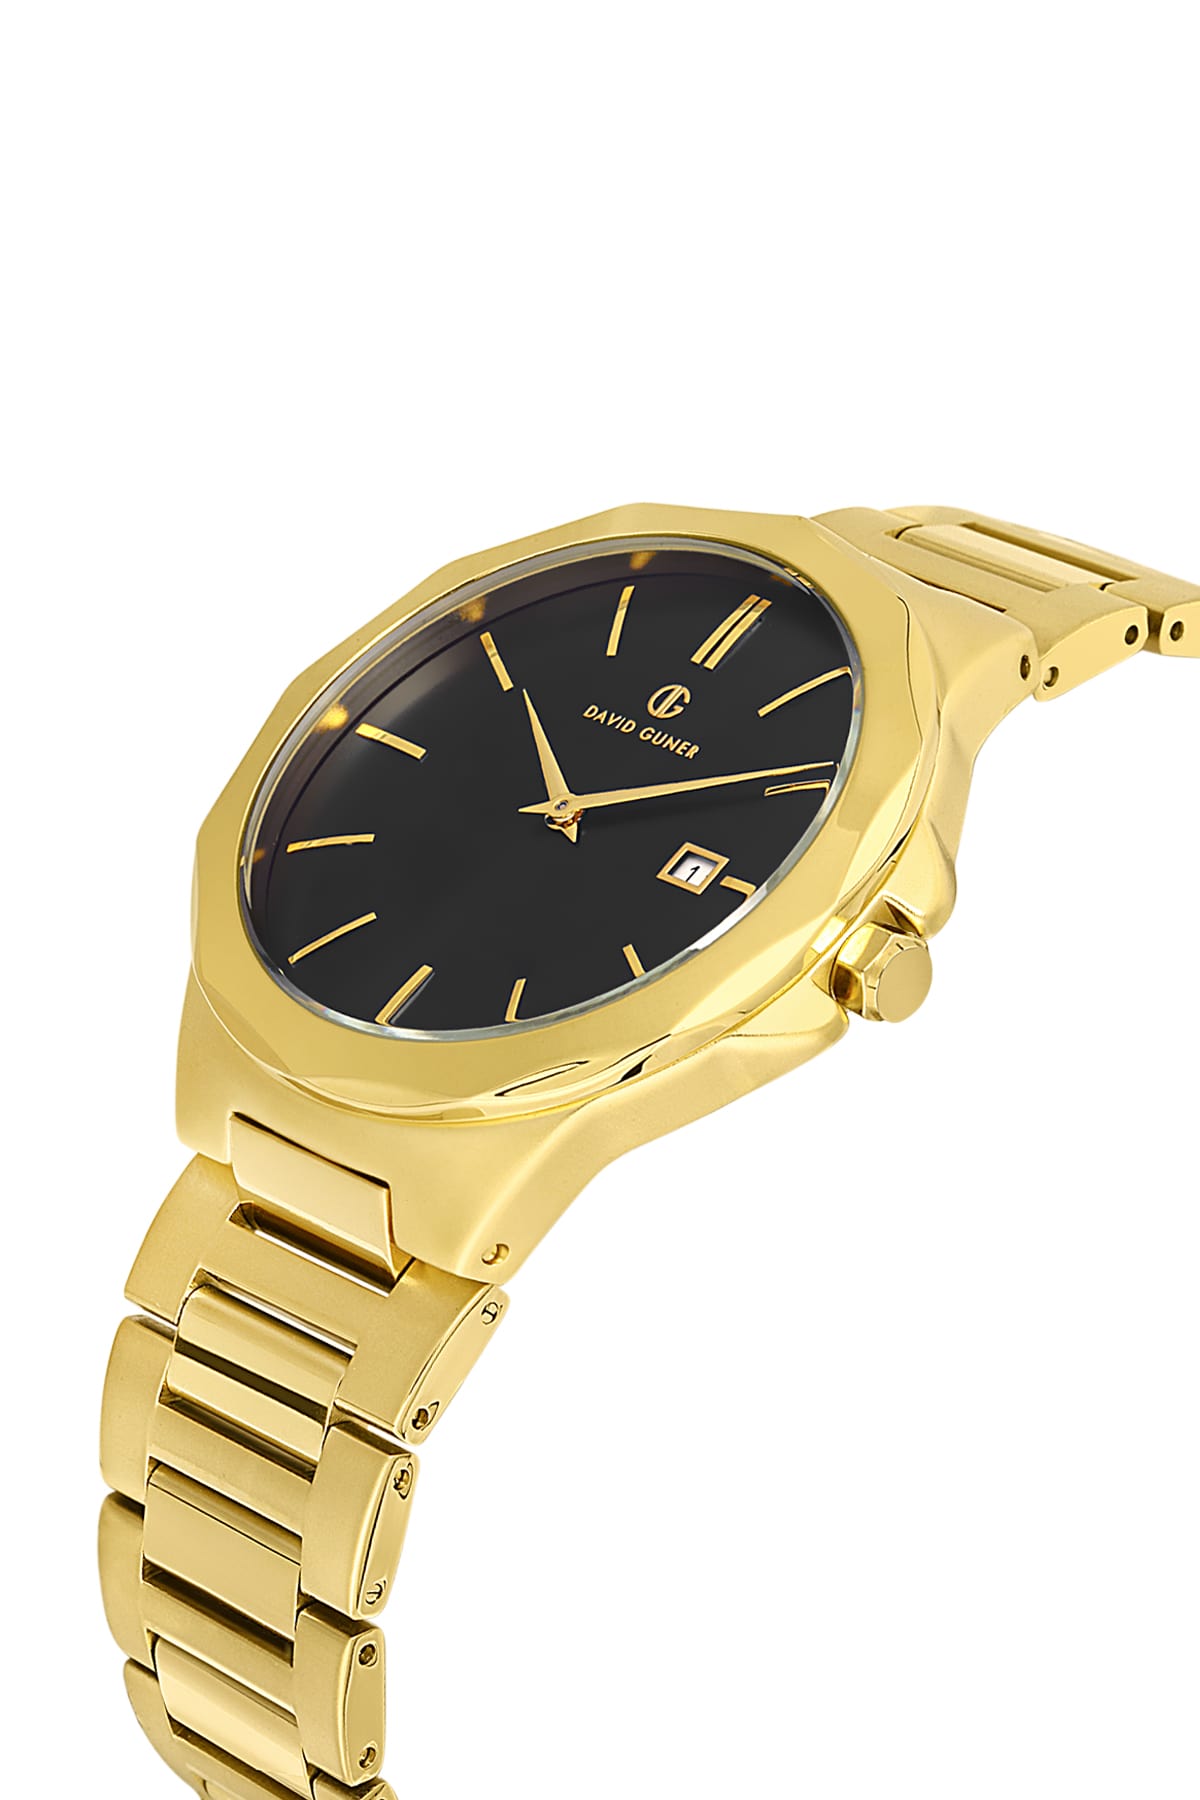 DAVID GUNER Men's Wristwatch with Black Dial and Yellow Coated Calendar